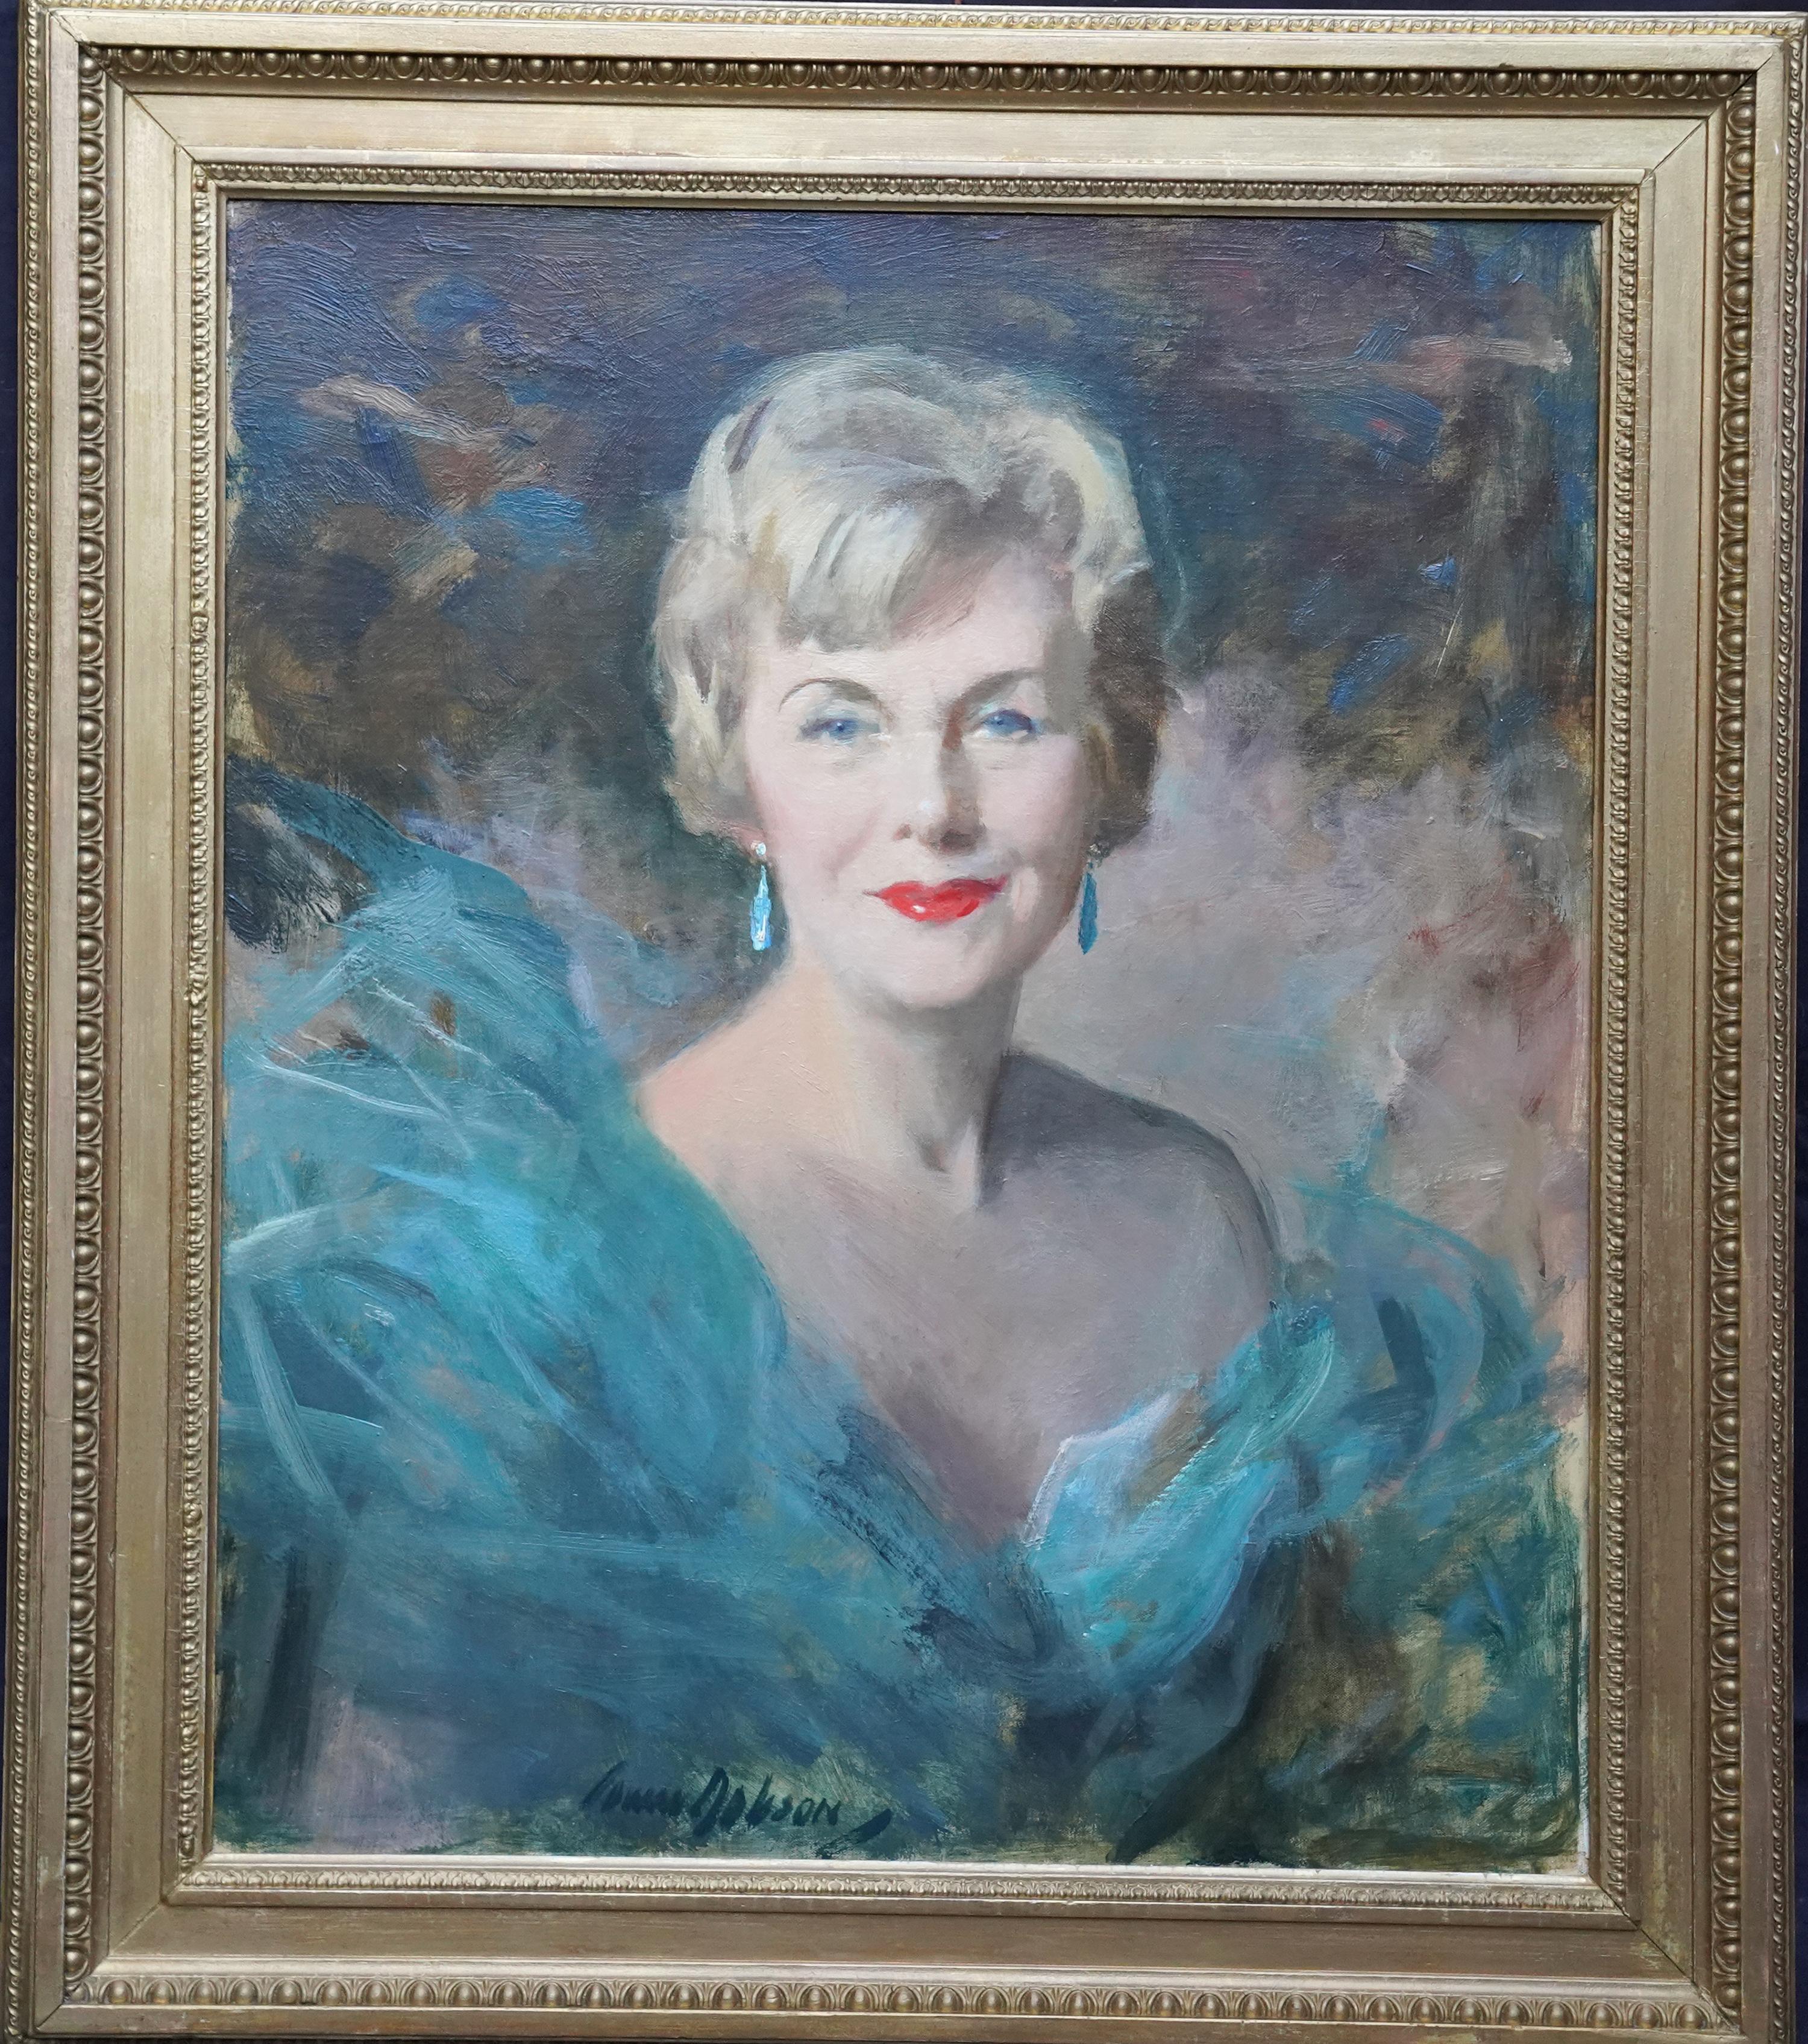 David Cowan Dobson Portrait Painting - Portrait of a Lady in Turquoise Dress - Scottish female portrait oil painting